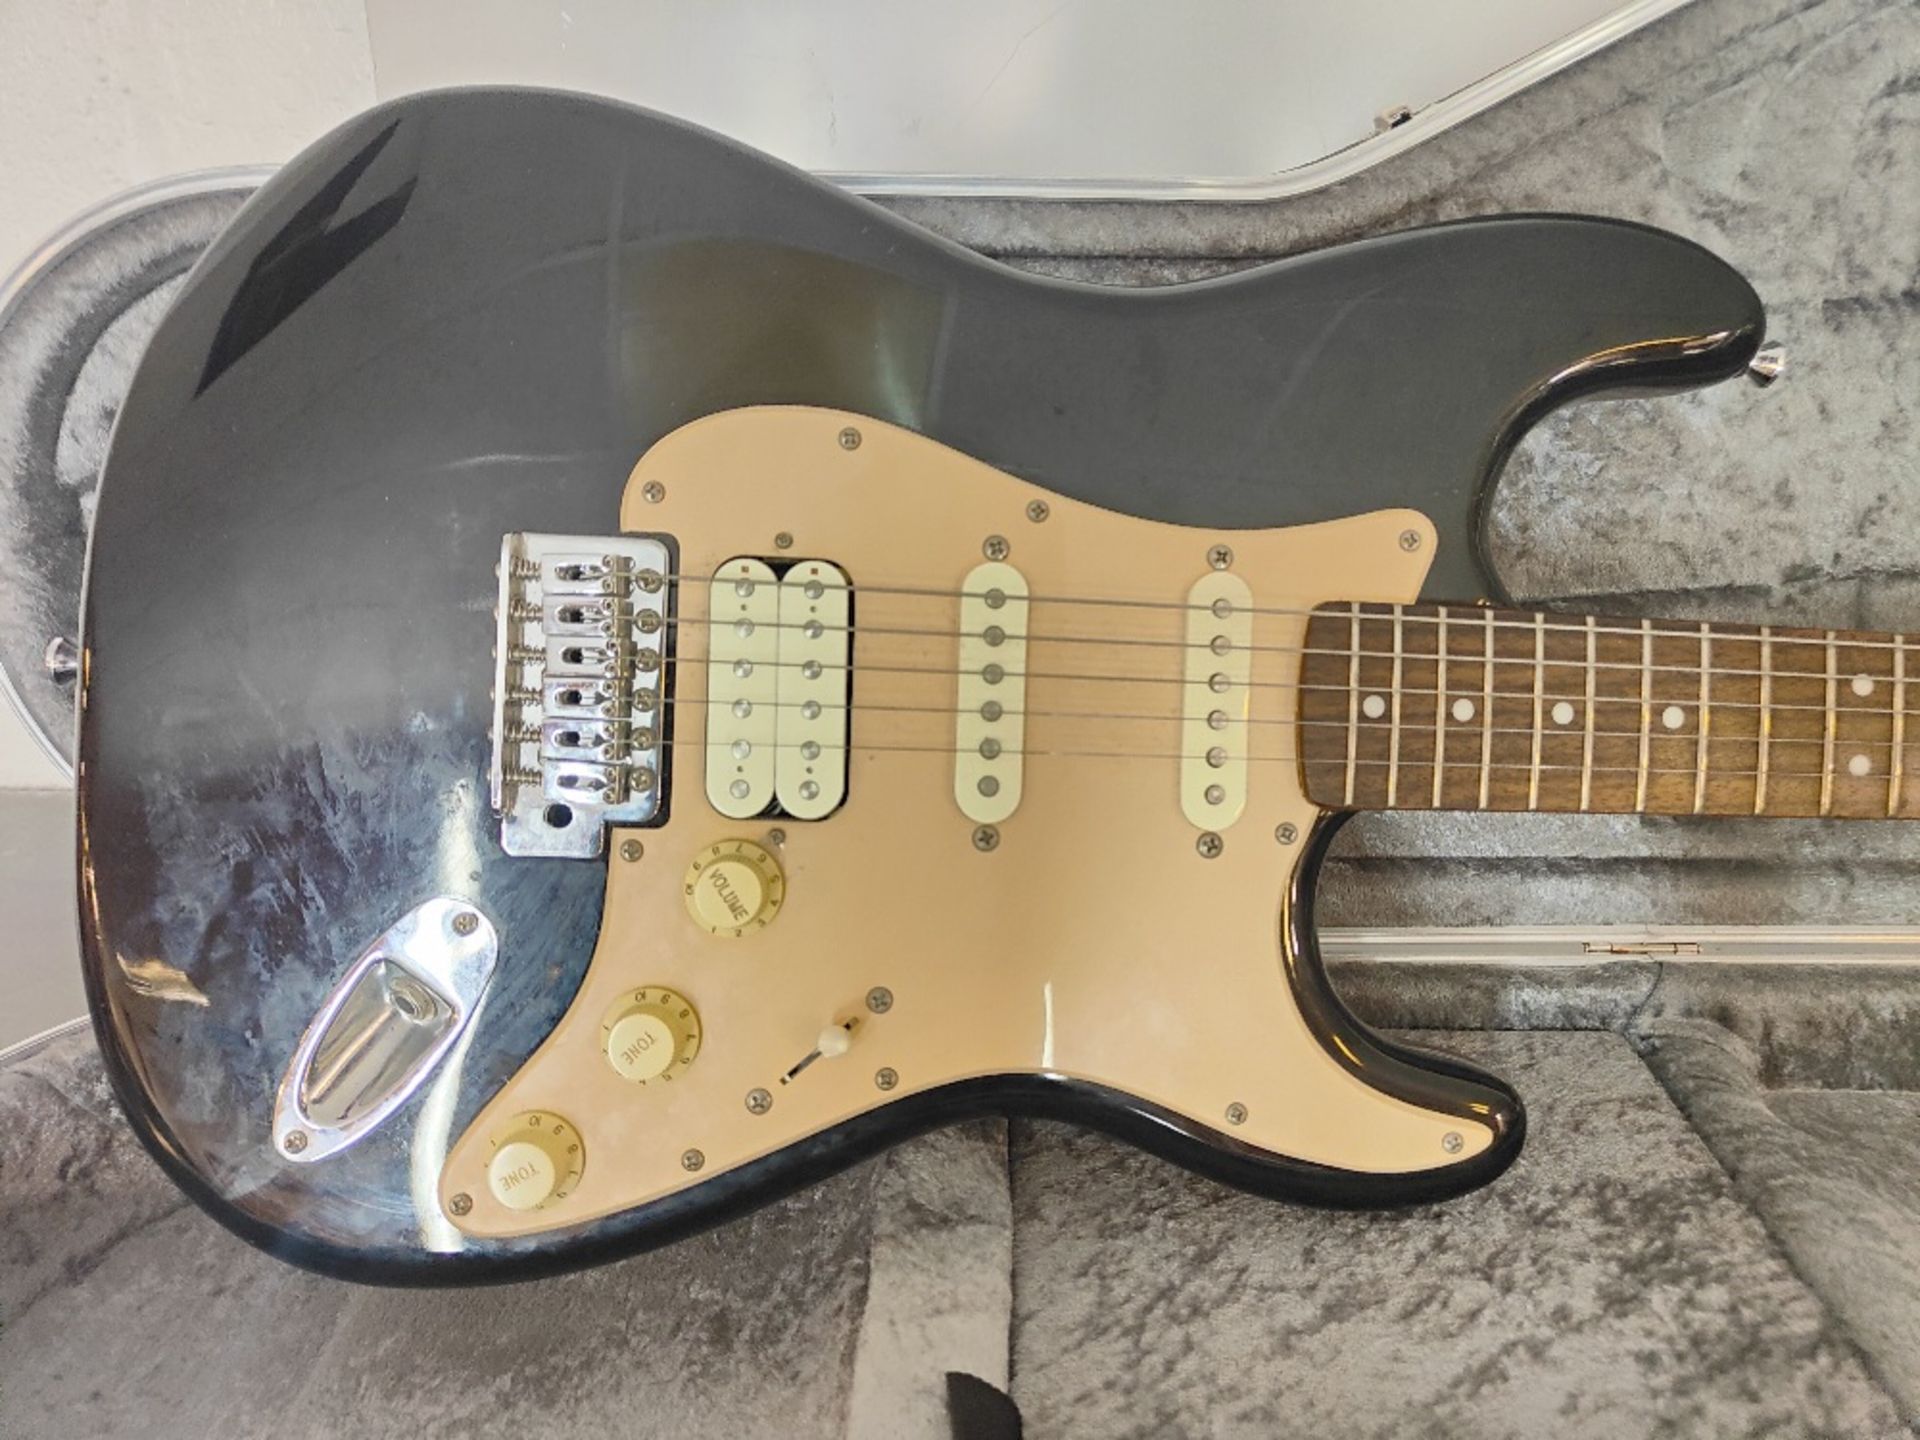 Fender Squier Bullet Strat guitar in carry case - Image 2 of 5